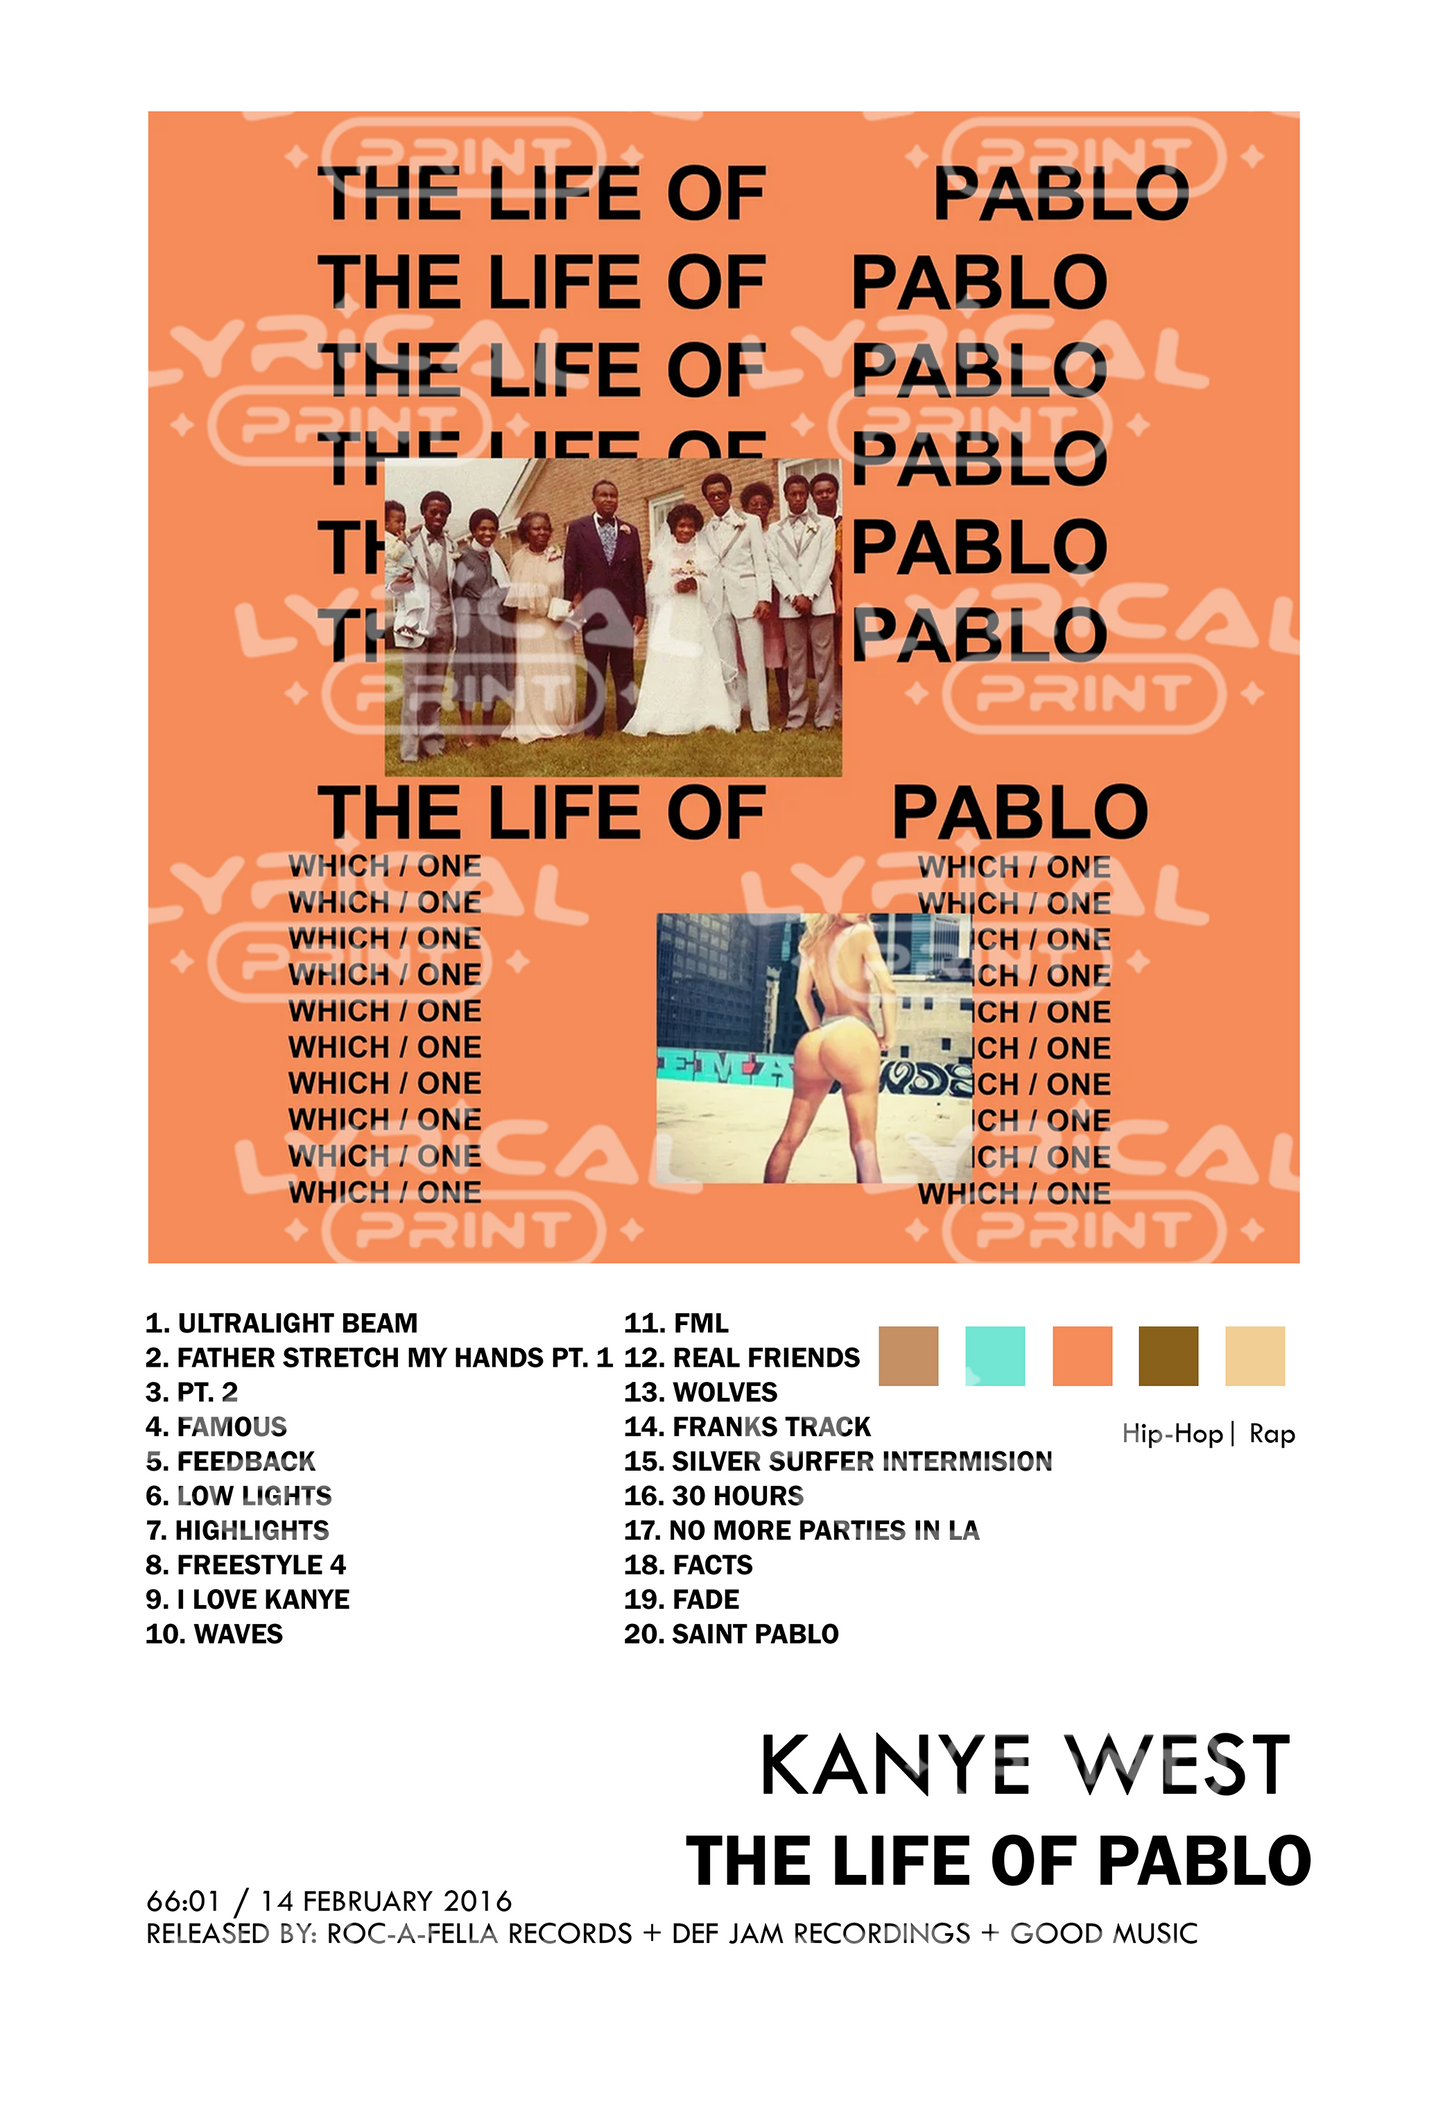 Kanye West - THE LIFE OF PABLO